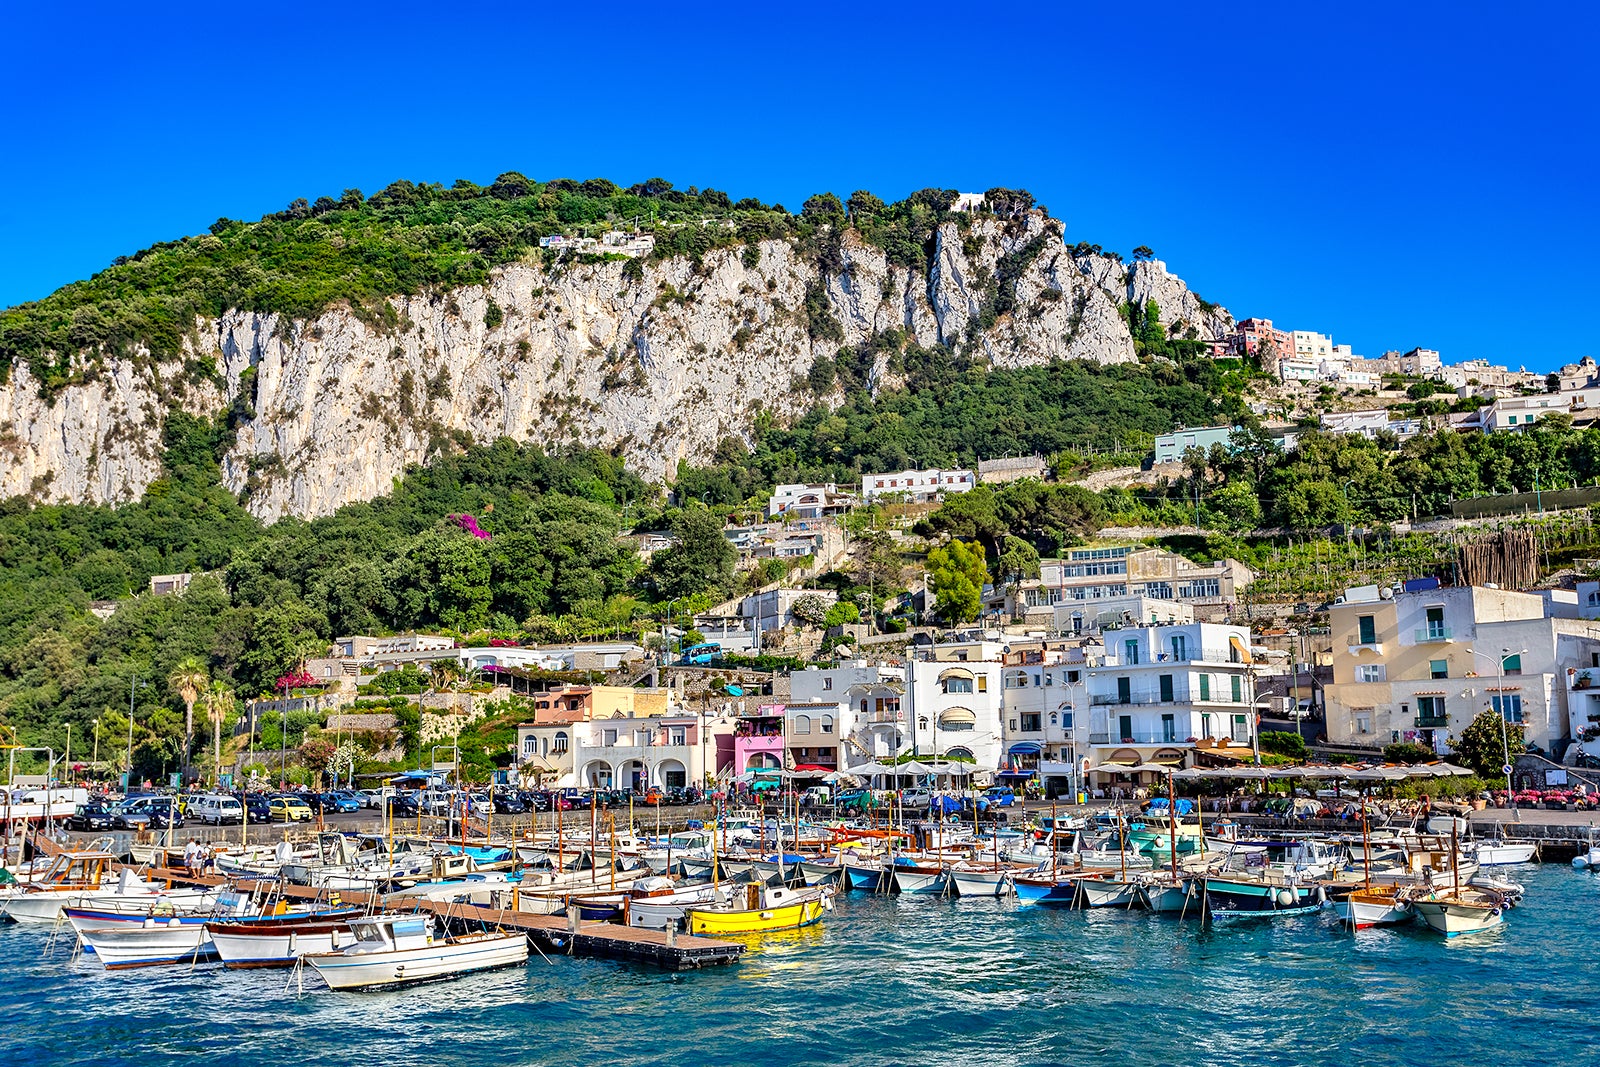 The island of Capri in Italy